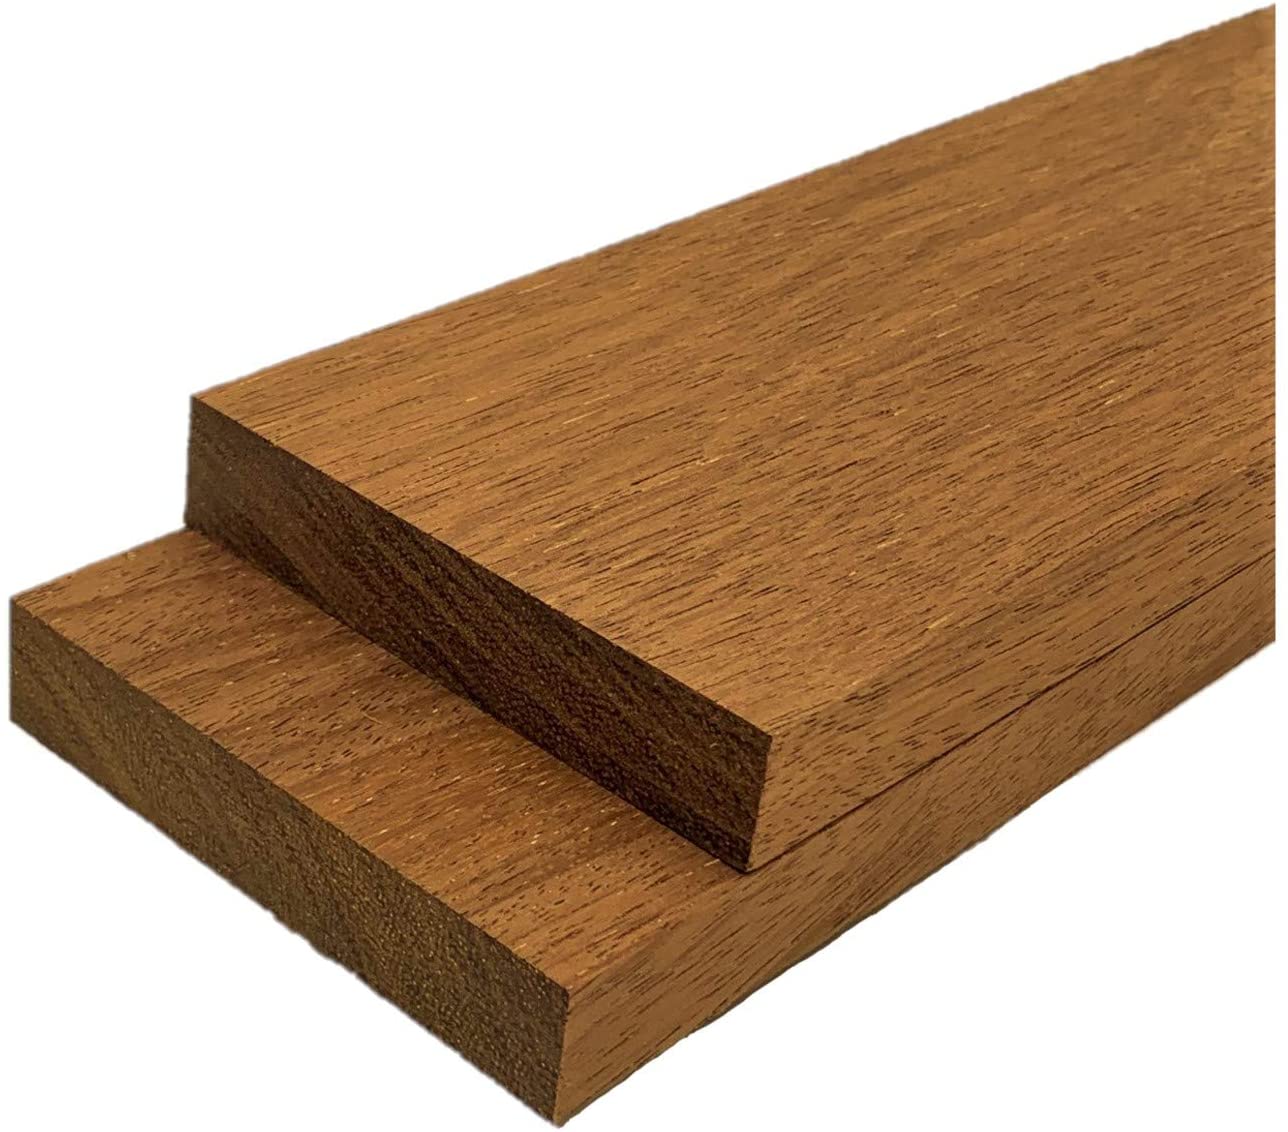 Merbau Lumber Board - 3/4" x 4" (2 Pcs)